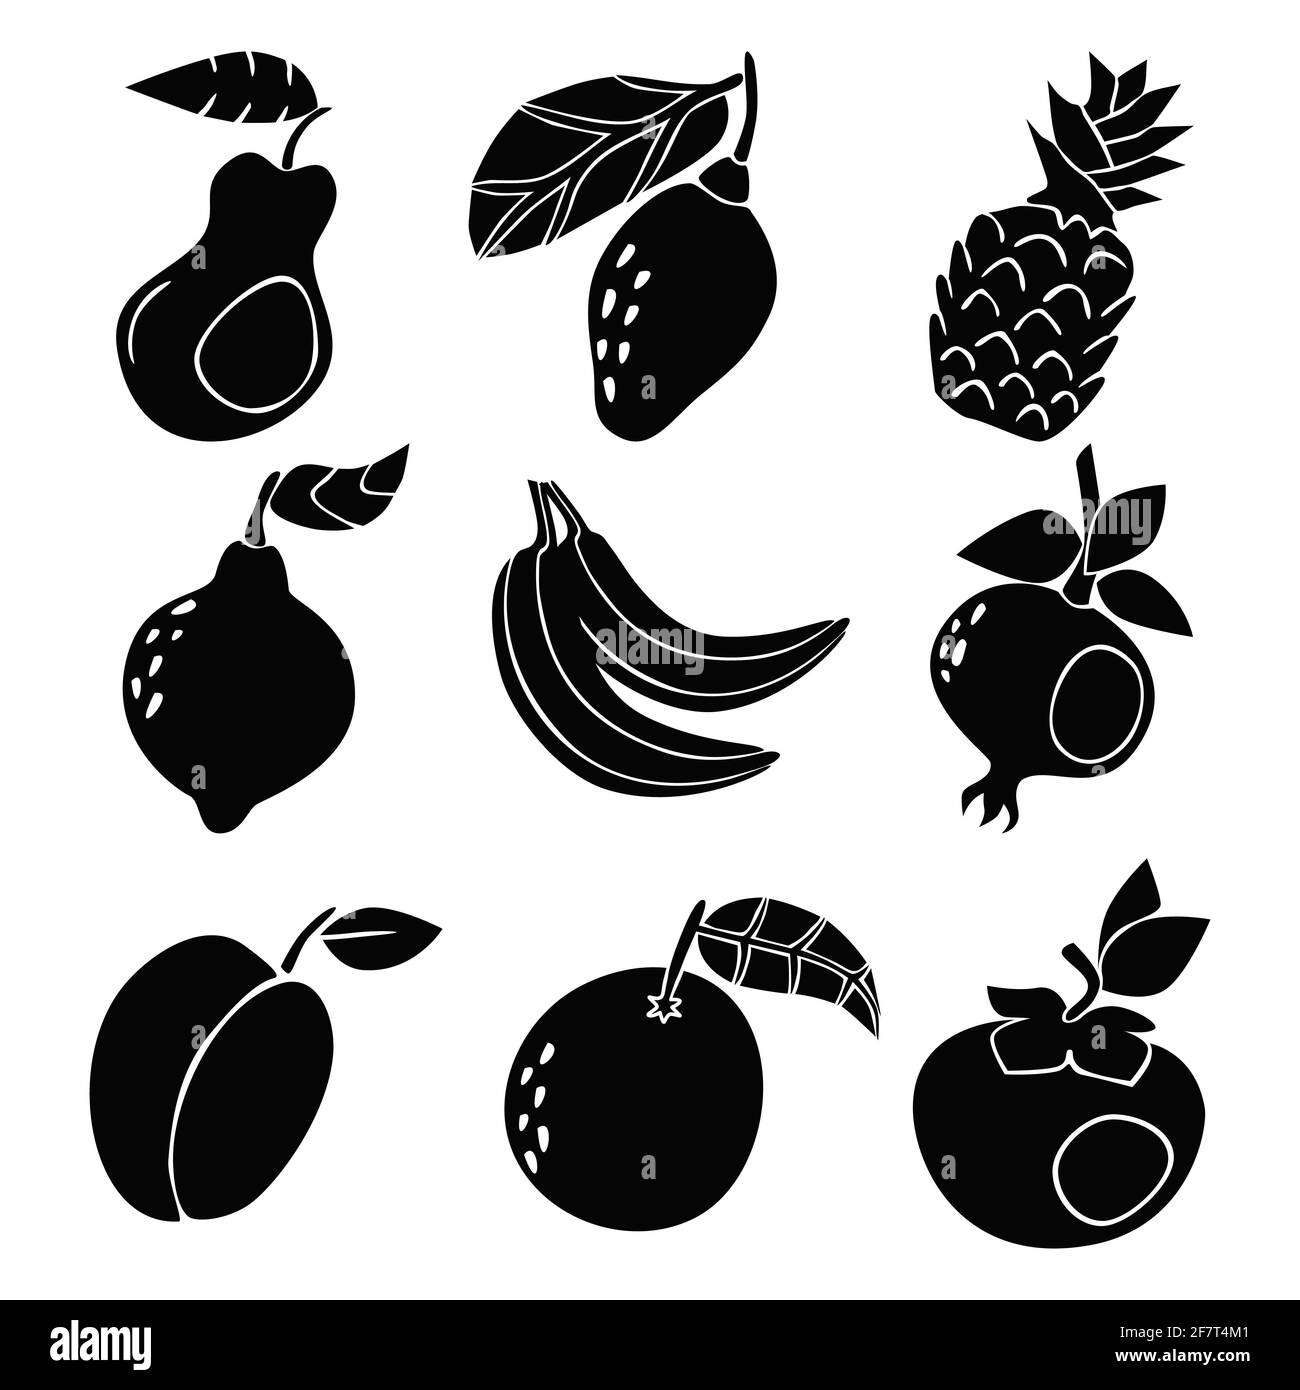 fruits detailed black silhouettes set. Pear, avocado, pineapple, lemon, banana, pomegranate plum orange persimmon vector illustration Stock Vector